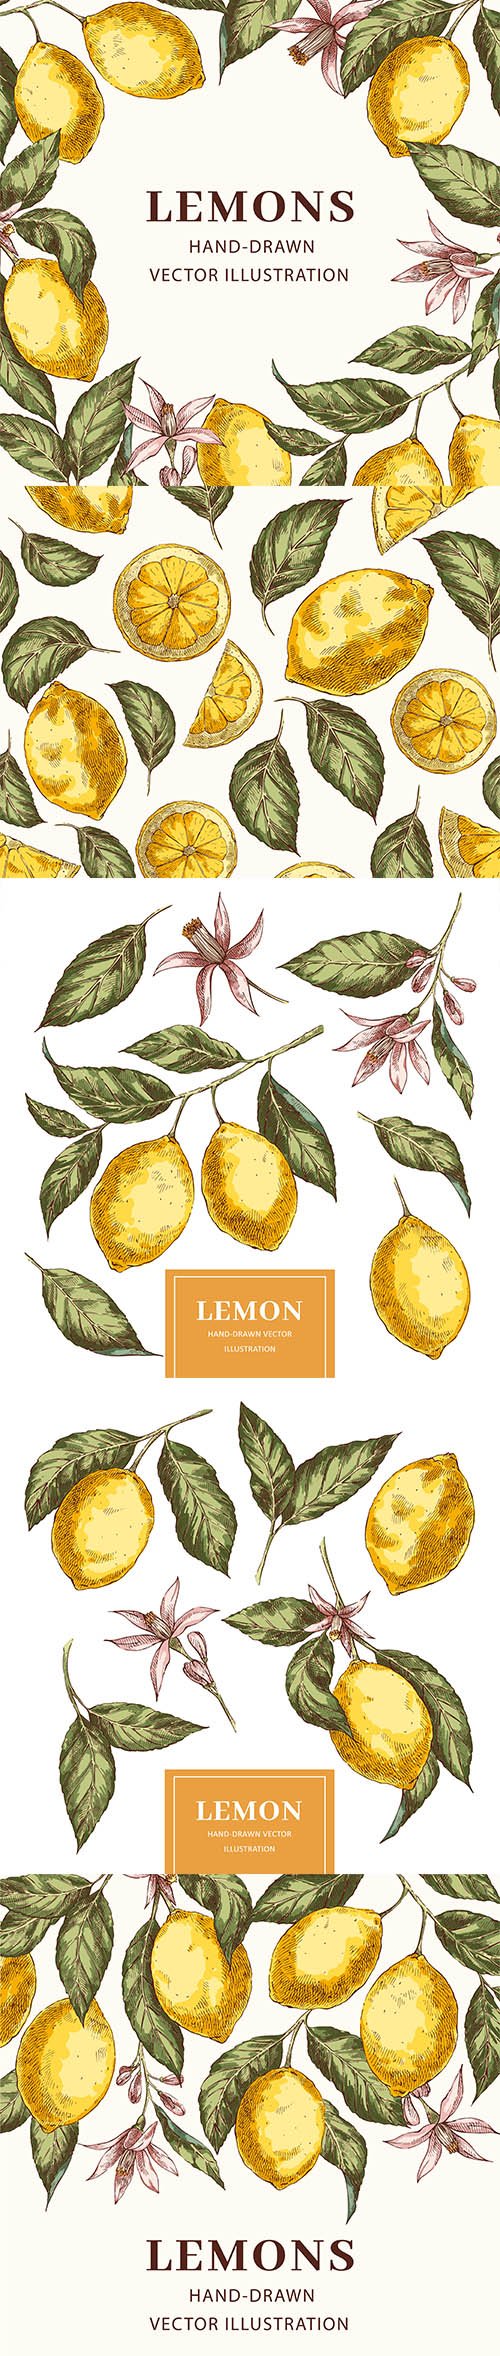 Lemons Hand-Drawn Illustrations